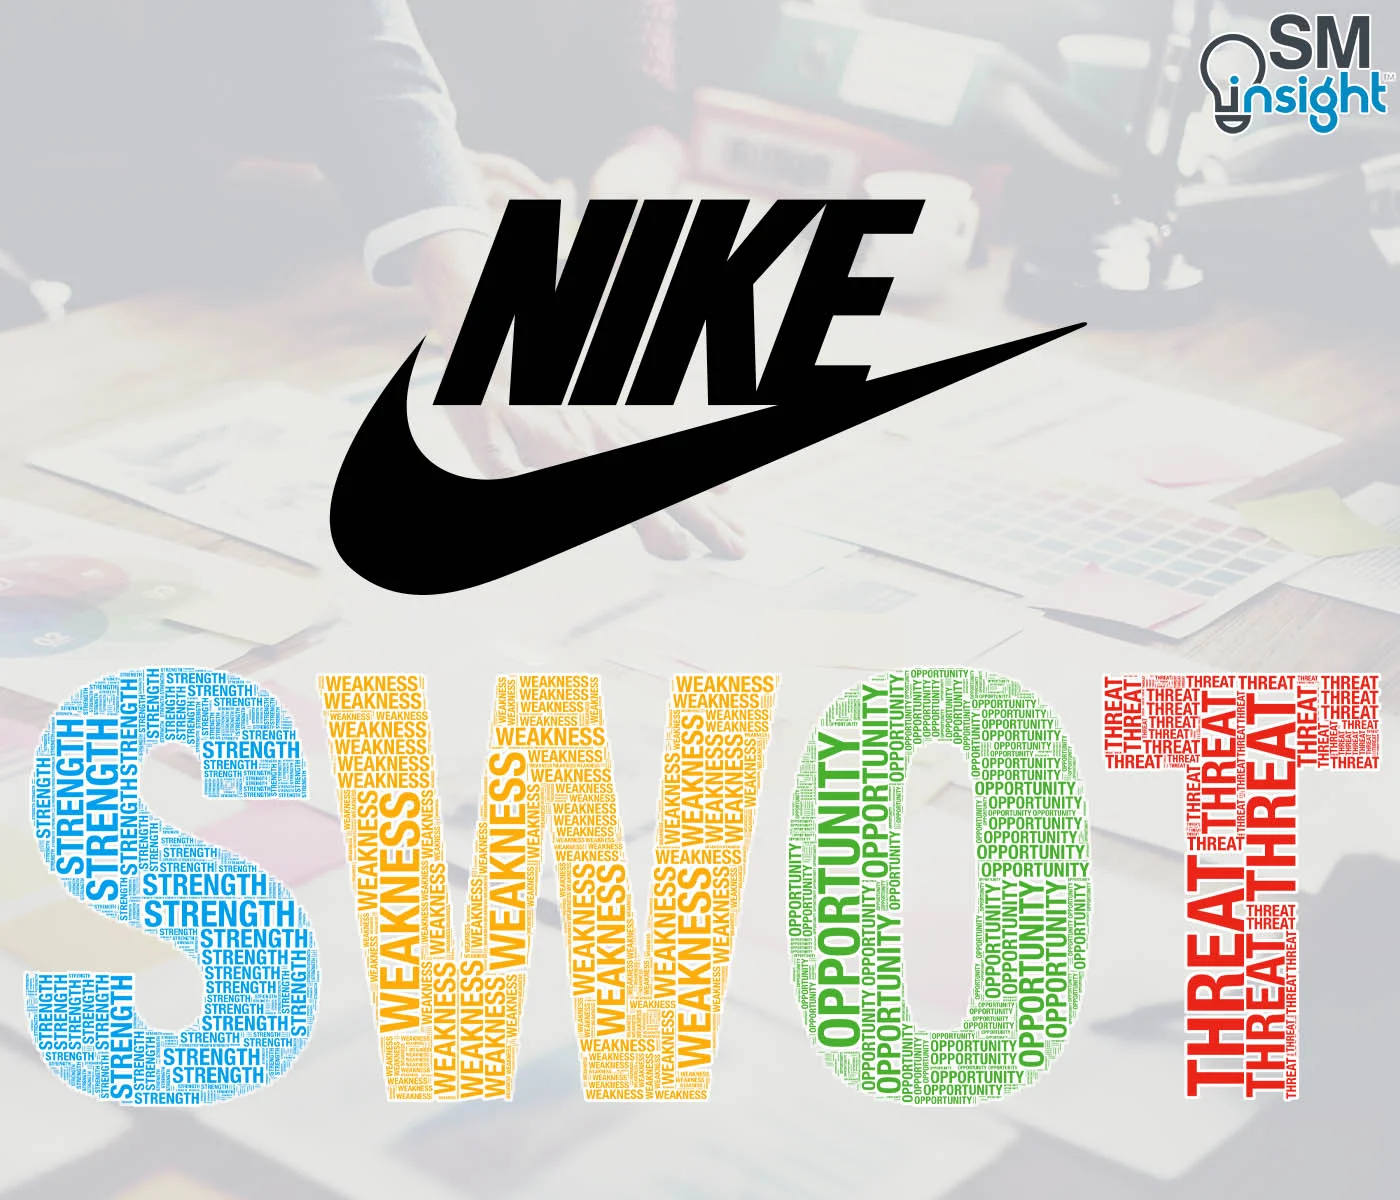 Nike SWOT analysis